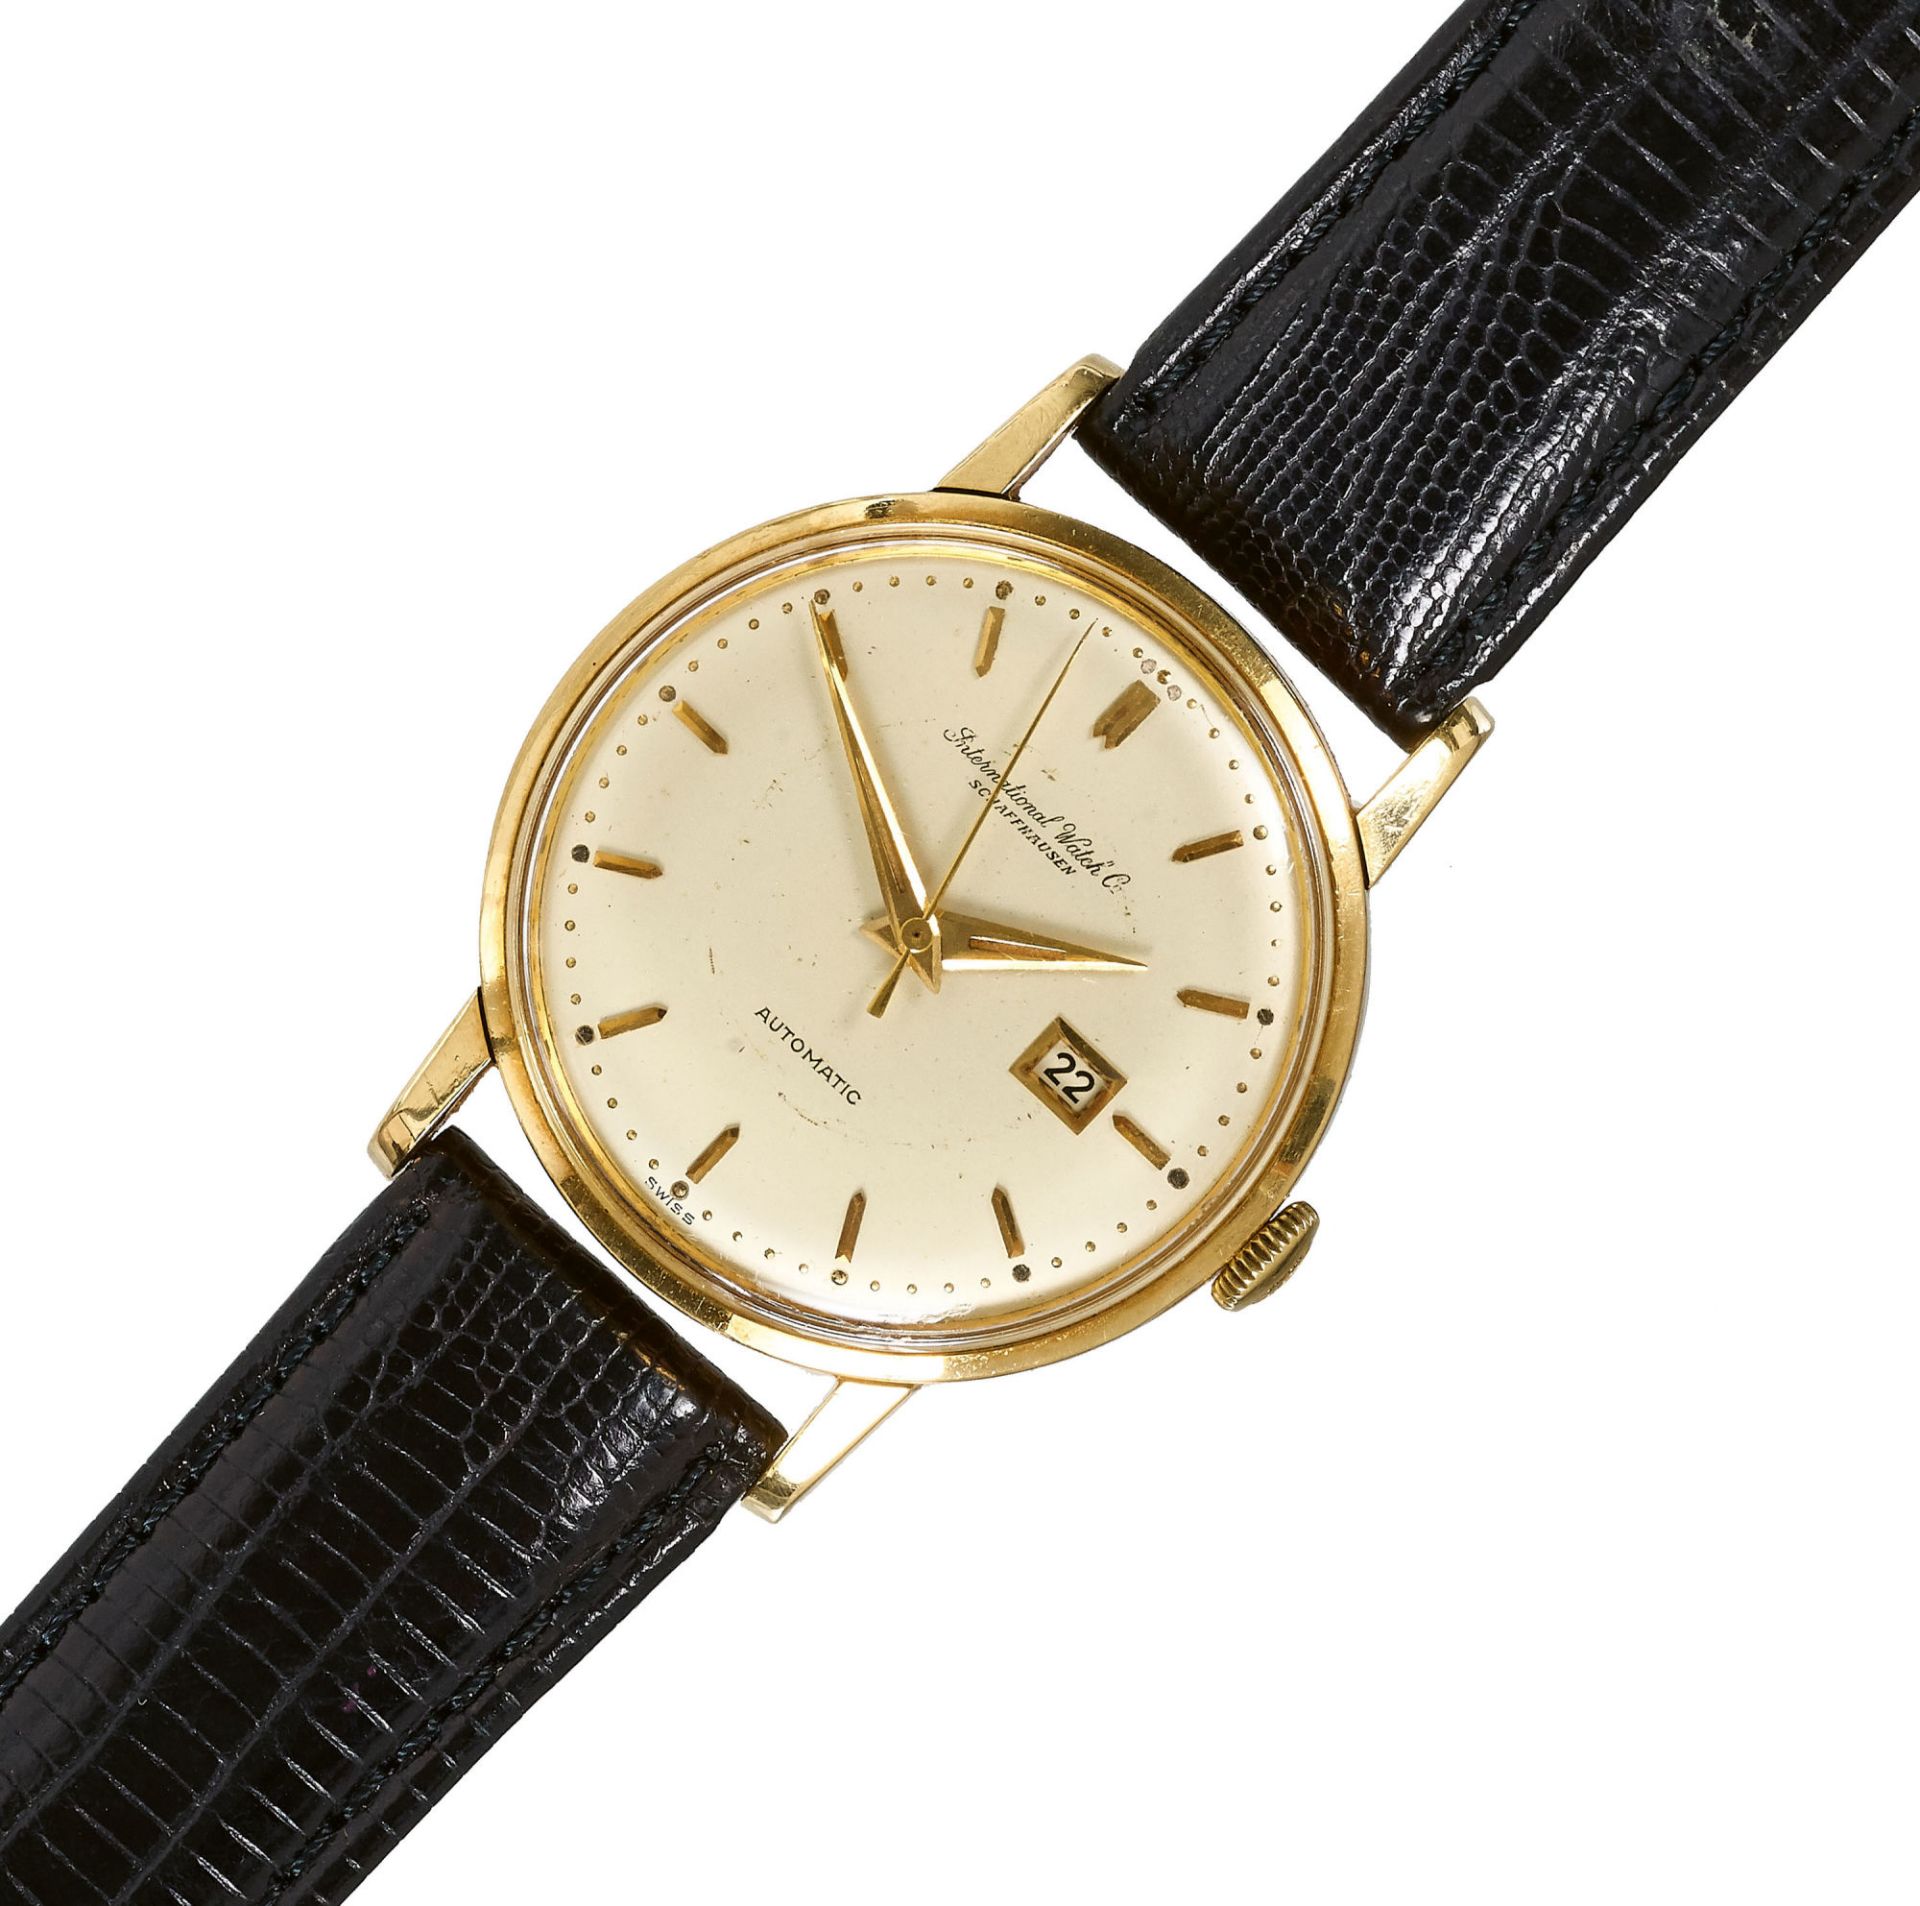 IWC: Vintage-Herrenarmbanduhr. / IWC, Vintage-gentleman's wristwatch.